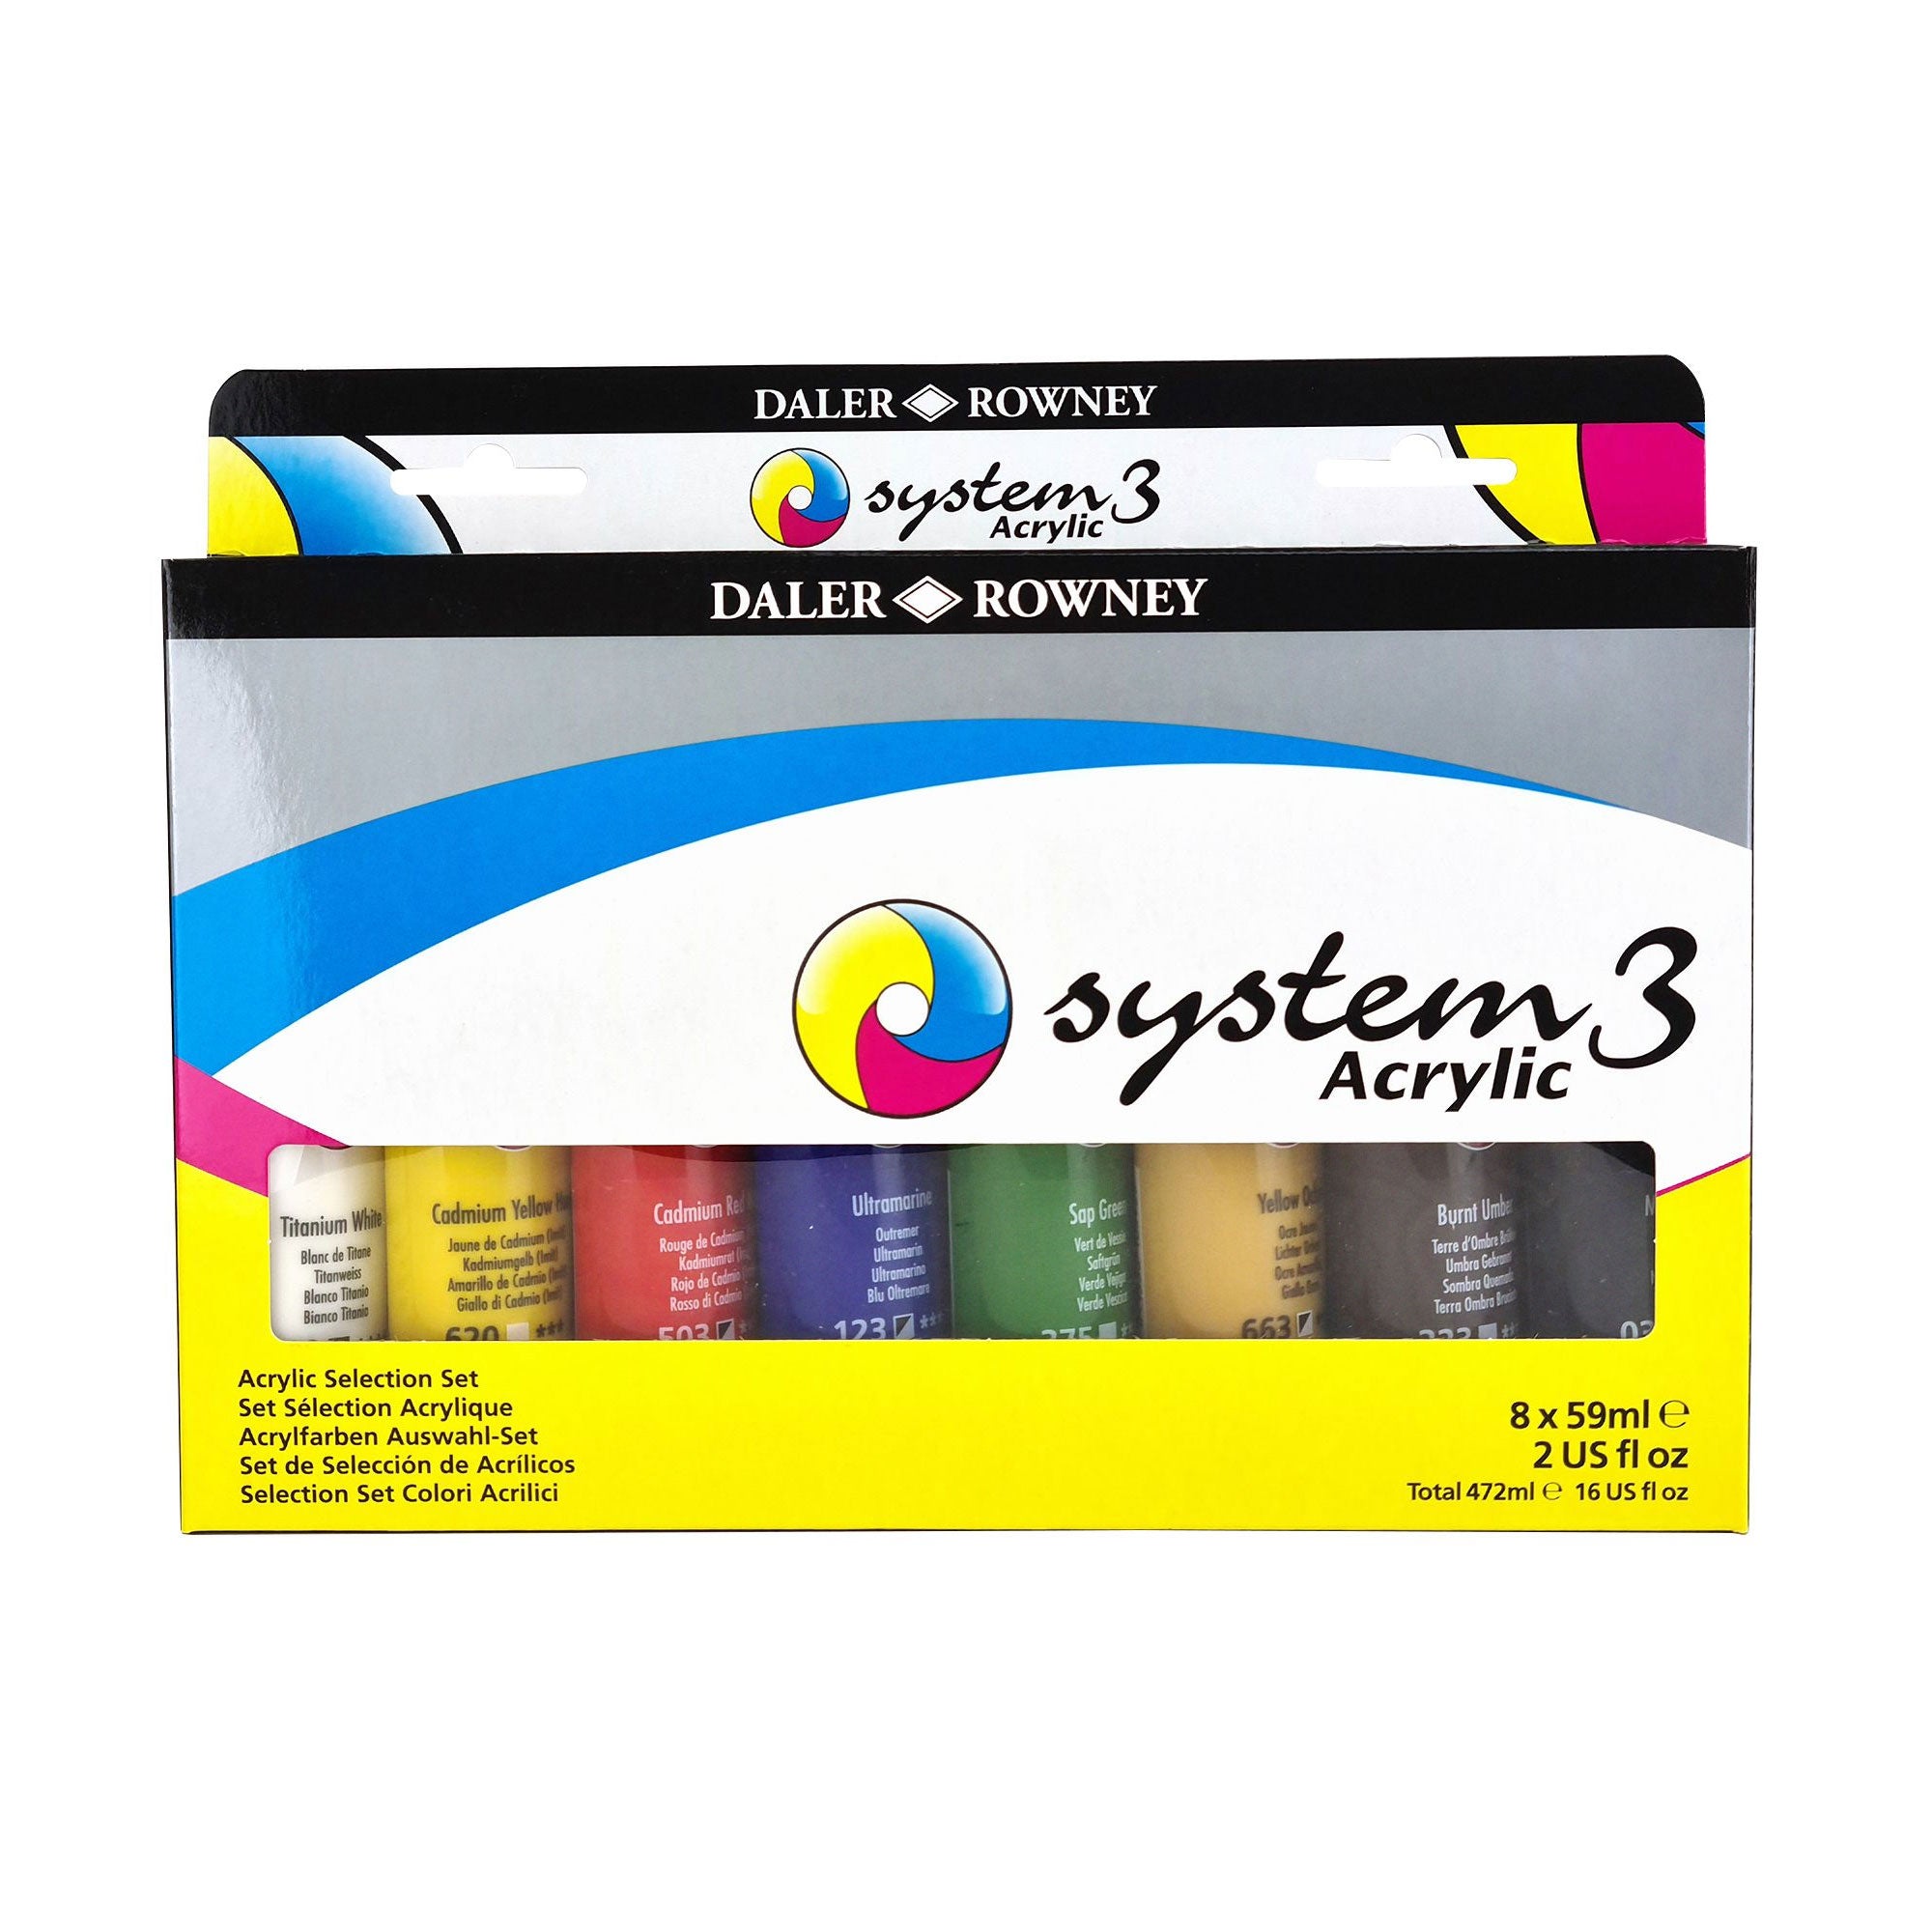 Daler-Rowney System3 Acrylic Paint Sets